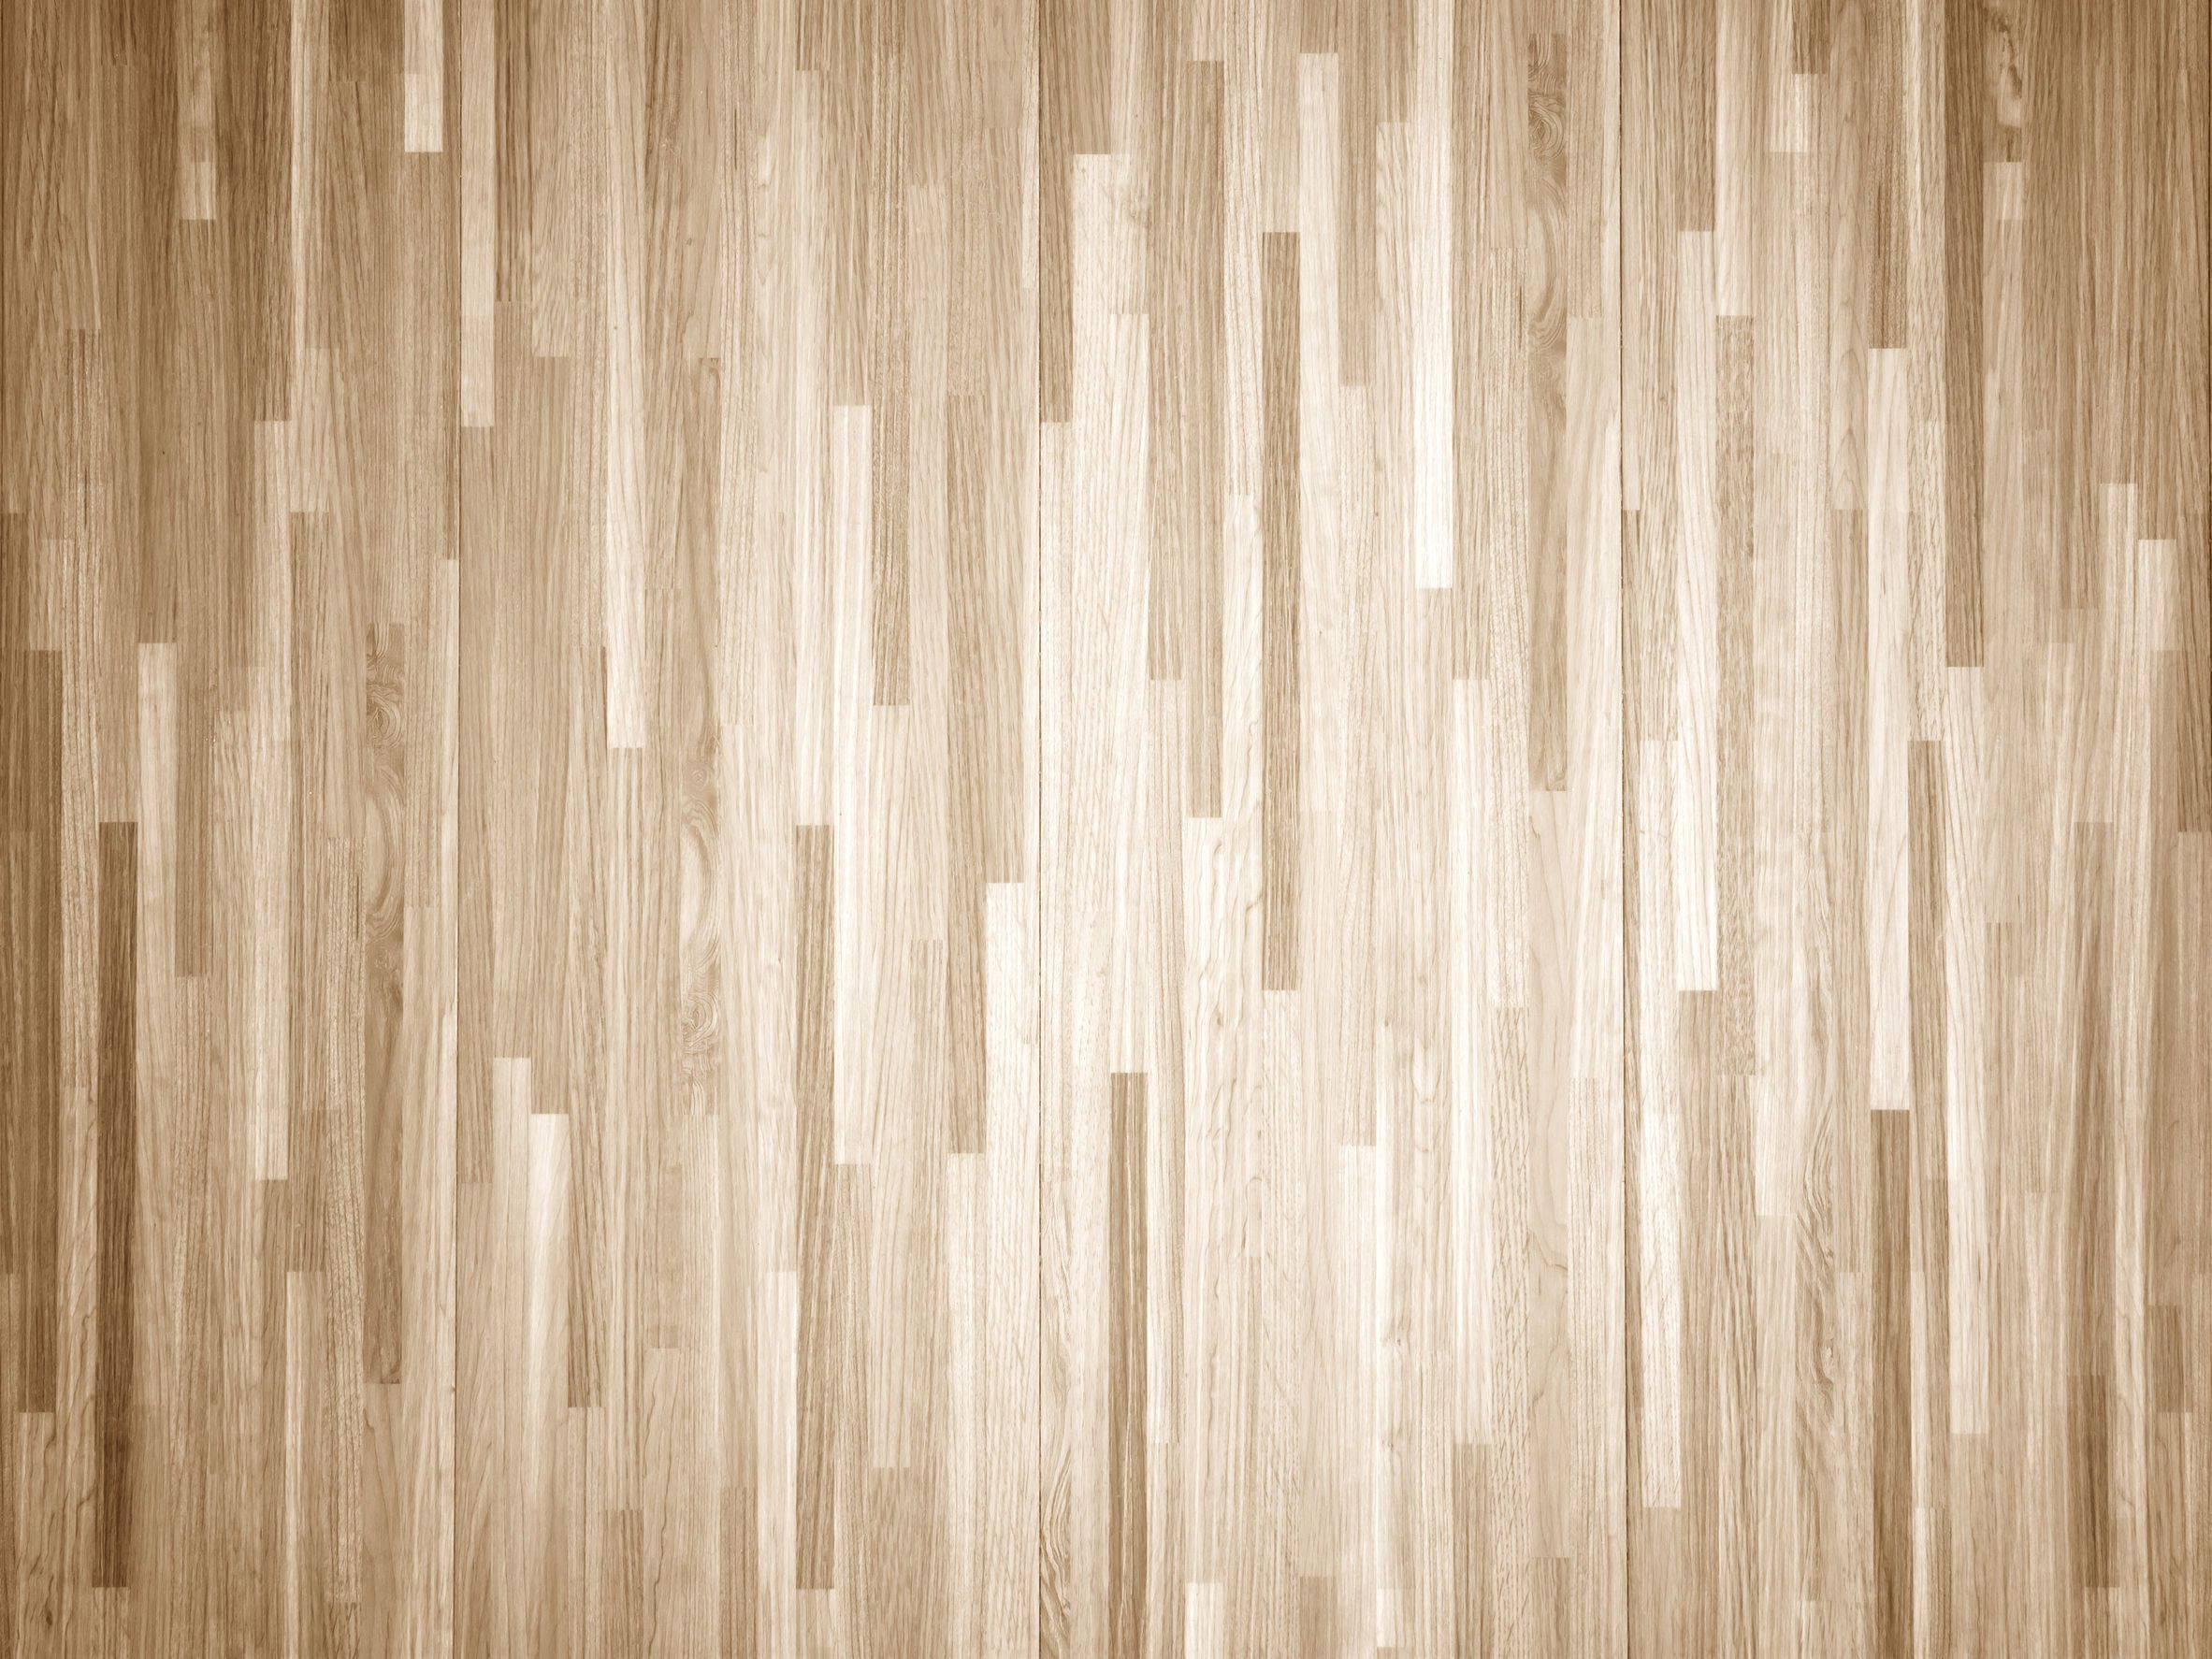 10 Lovely Hardwood Floor Cleaner Leaves Film 2024 free download hardwood floor cleaner leaves film of how to chemically strip wood floors woodfloordoctor com for you